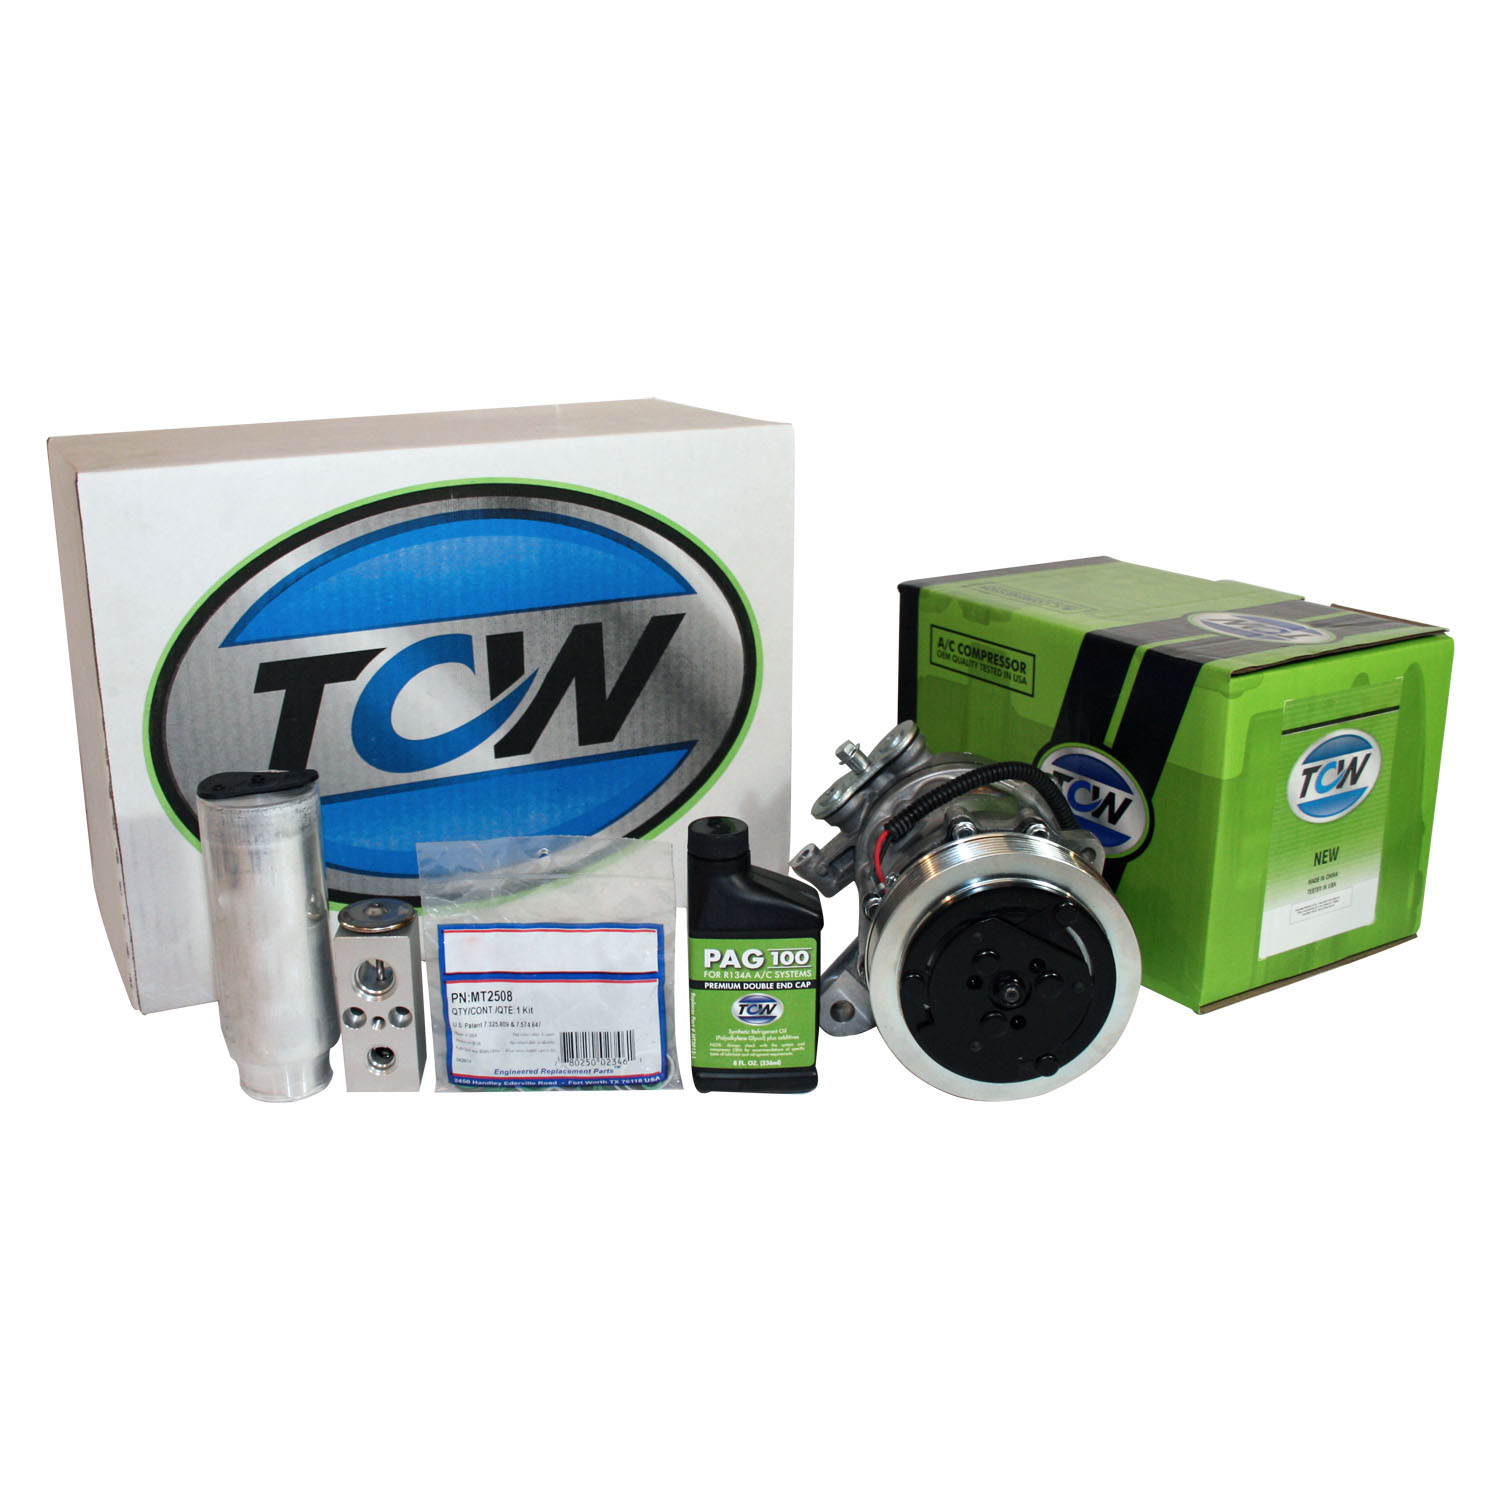 TCW Vehicle A/C Kit K1000301N New Product Image field_60b6a13a6e67c